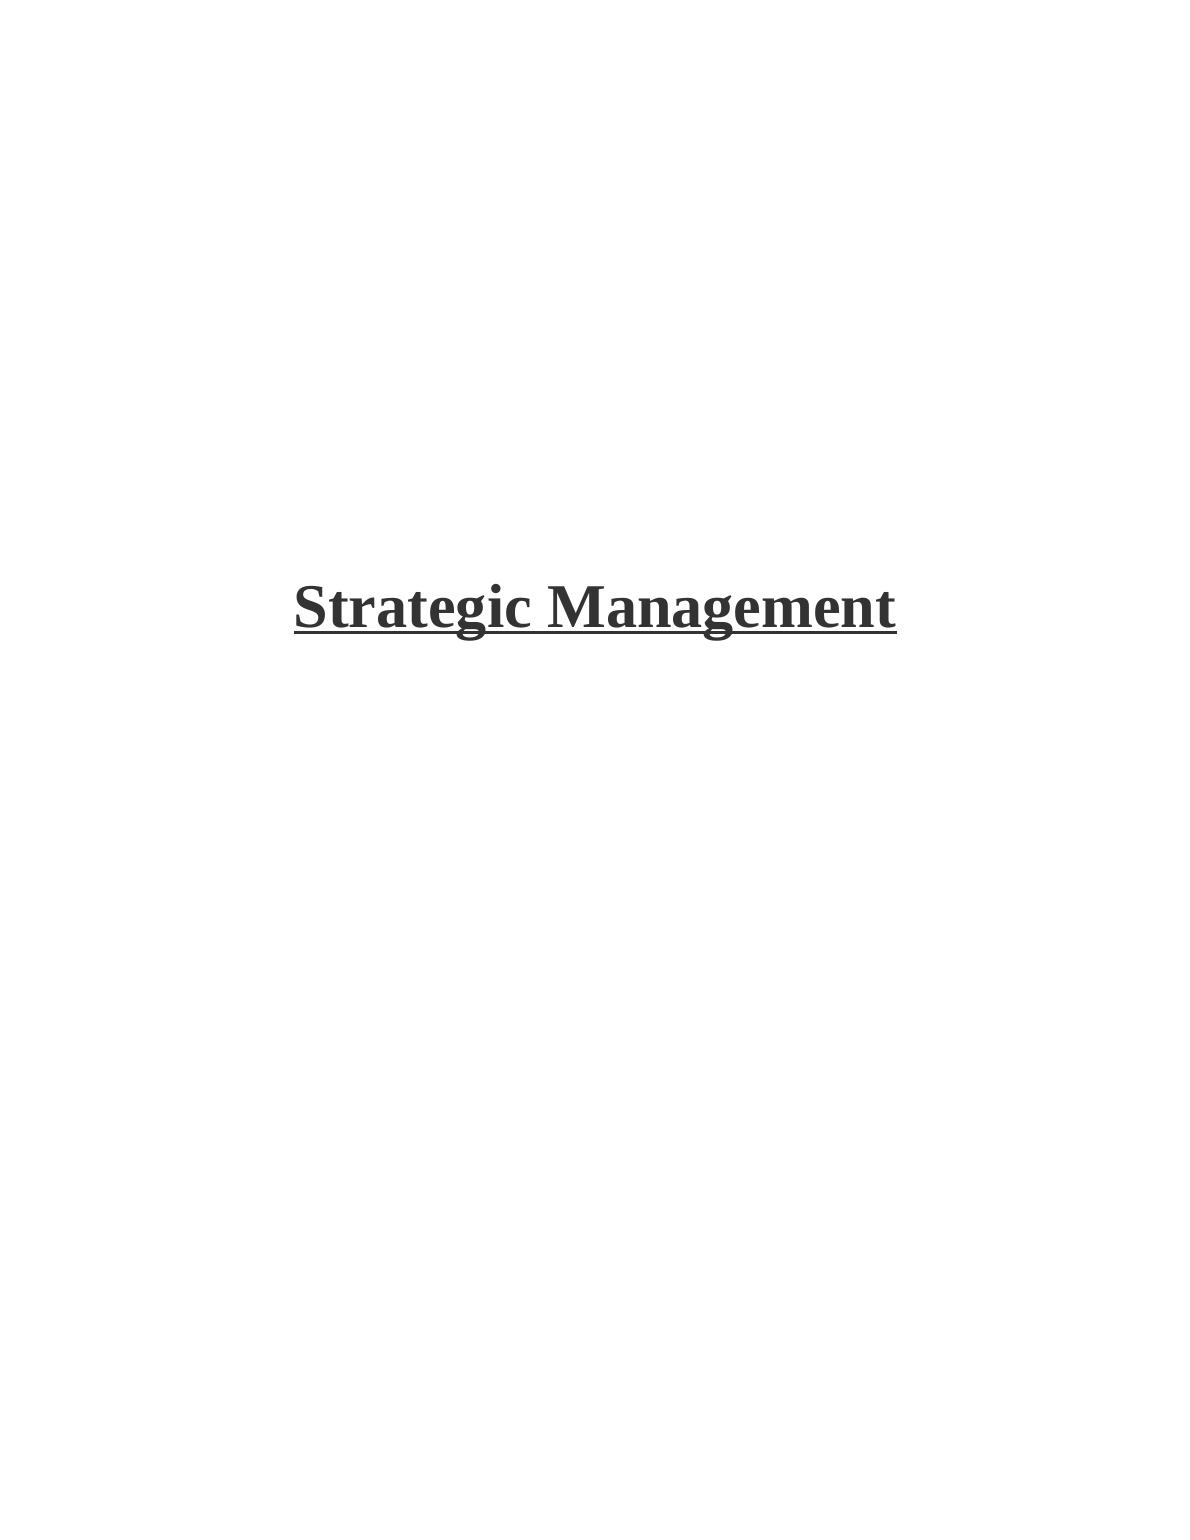 Strategic Management EXECUTIVE SUMMARY: Sentek Solutions_1